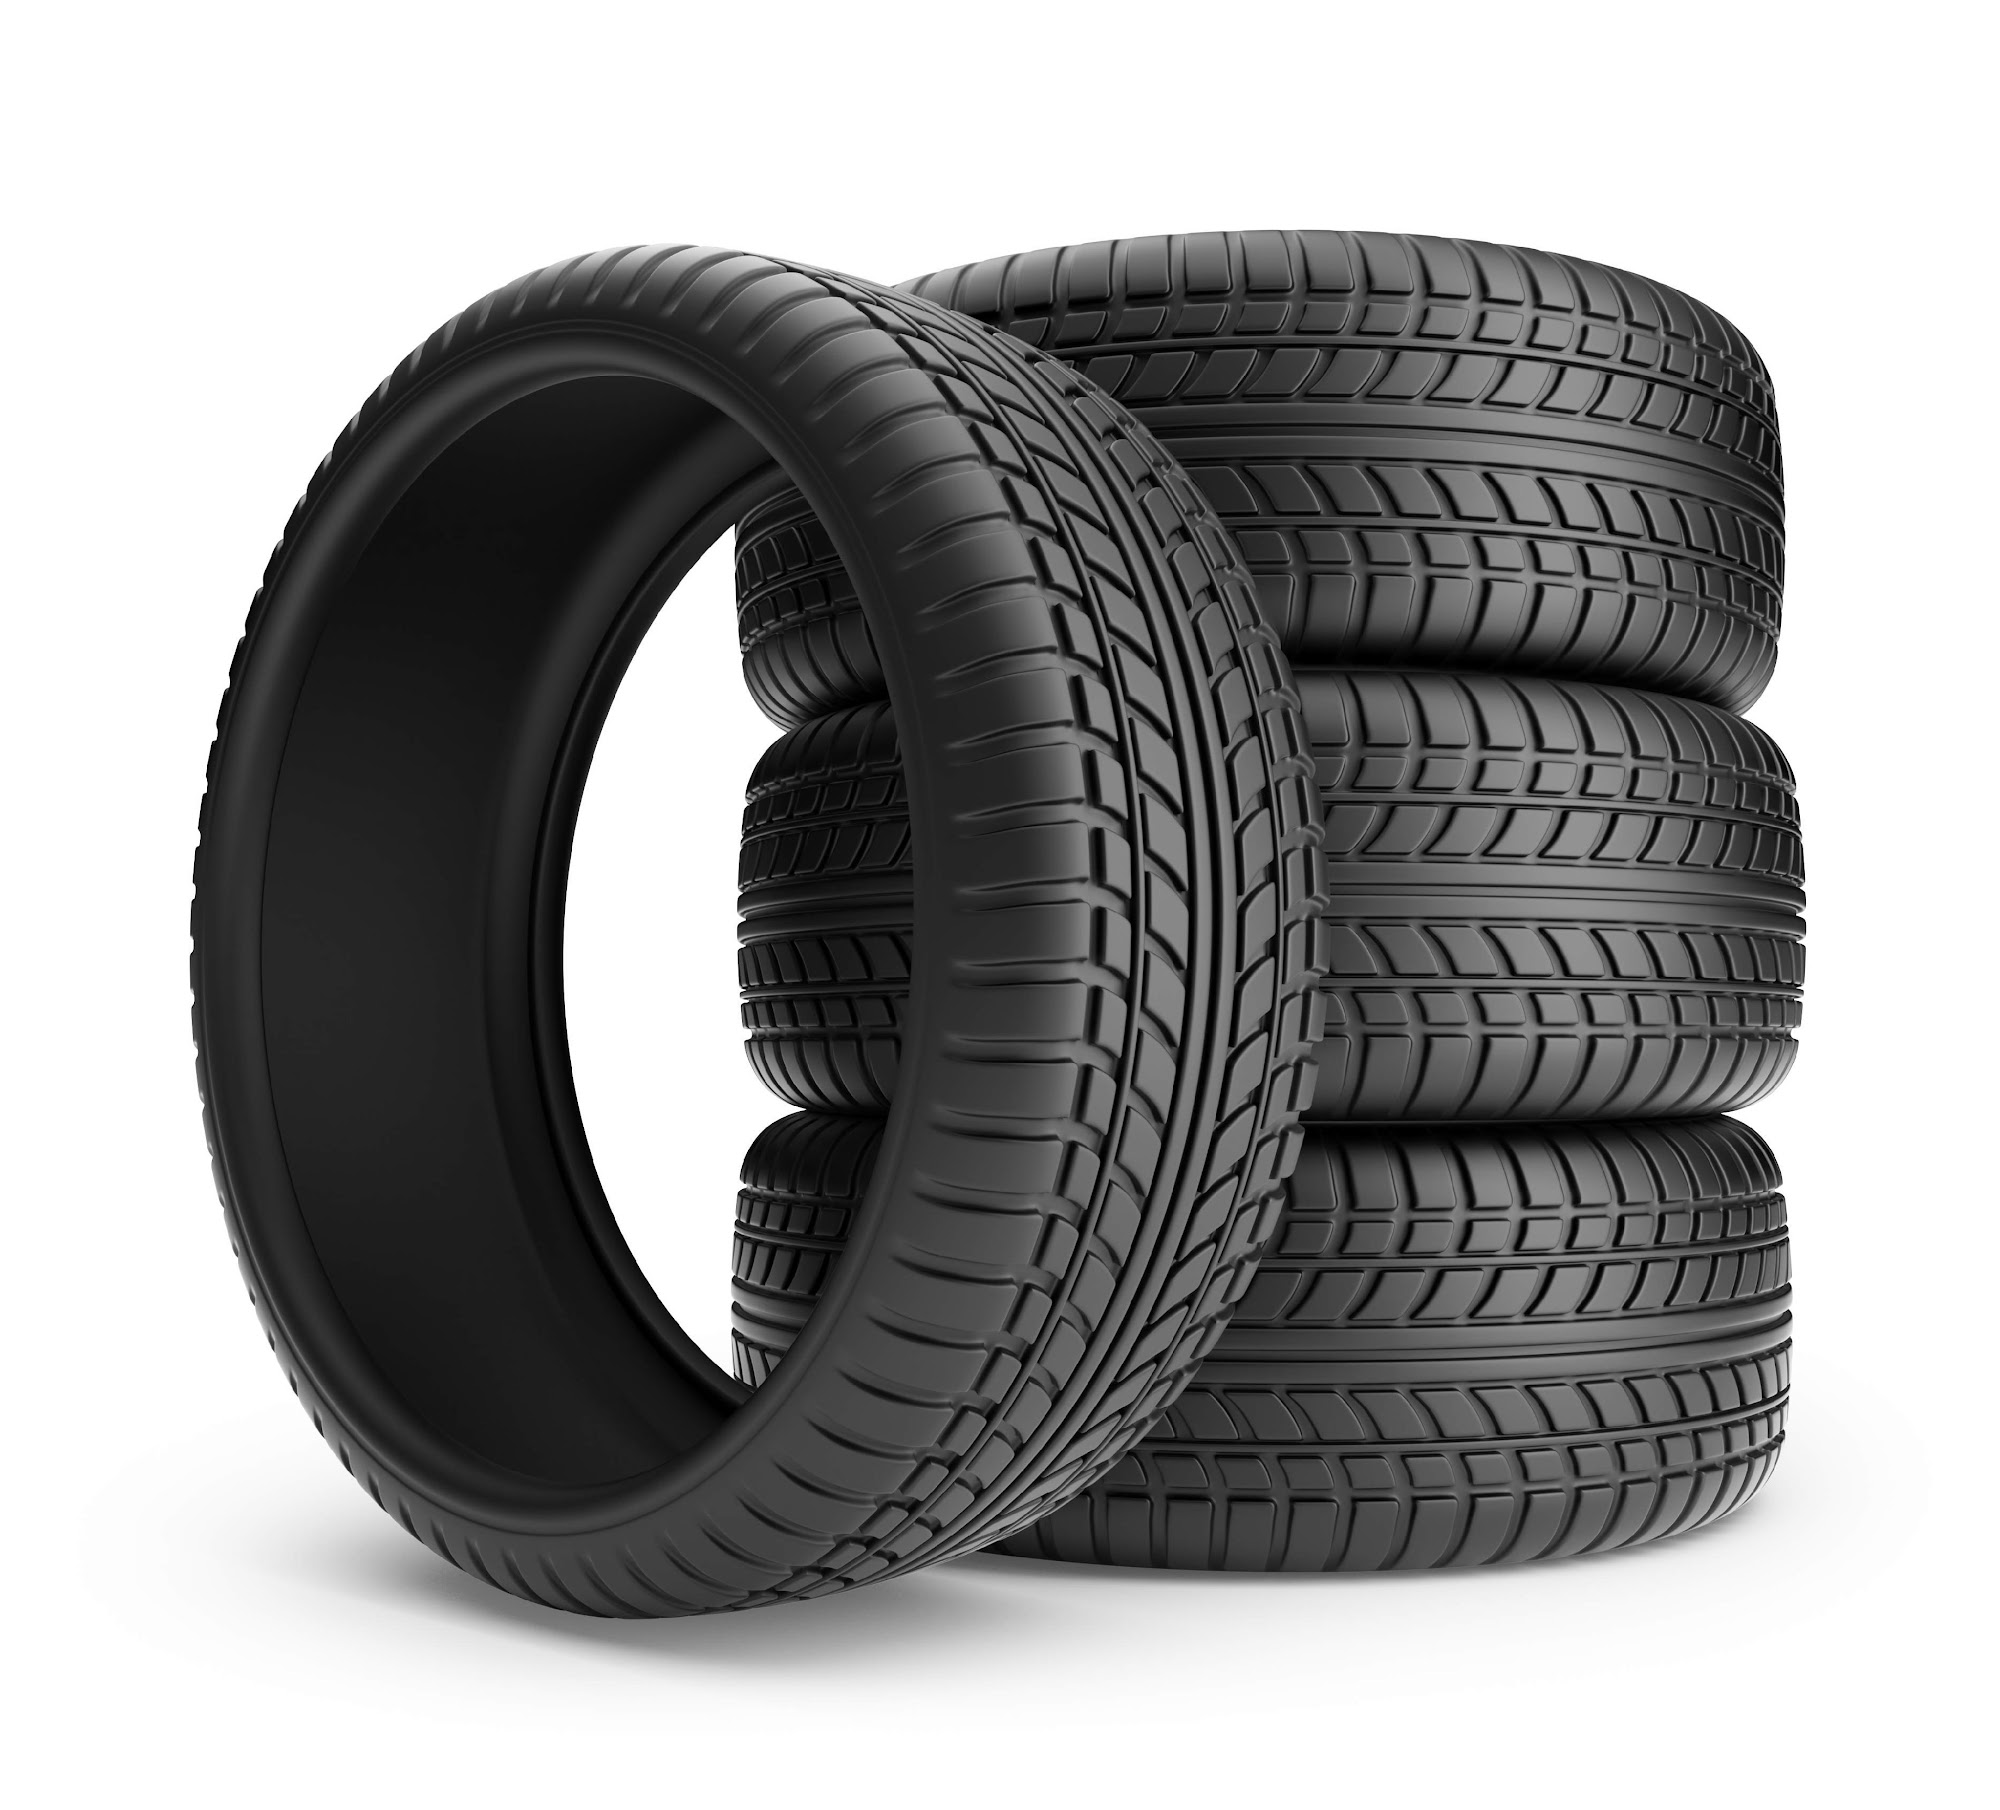 Salopian Tyres Ltd